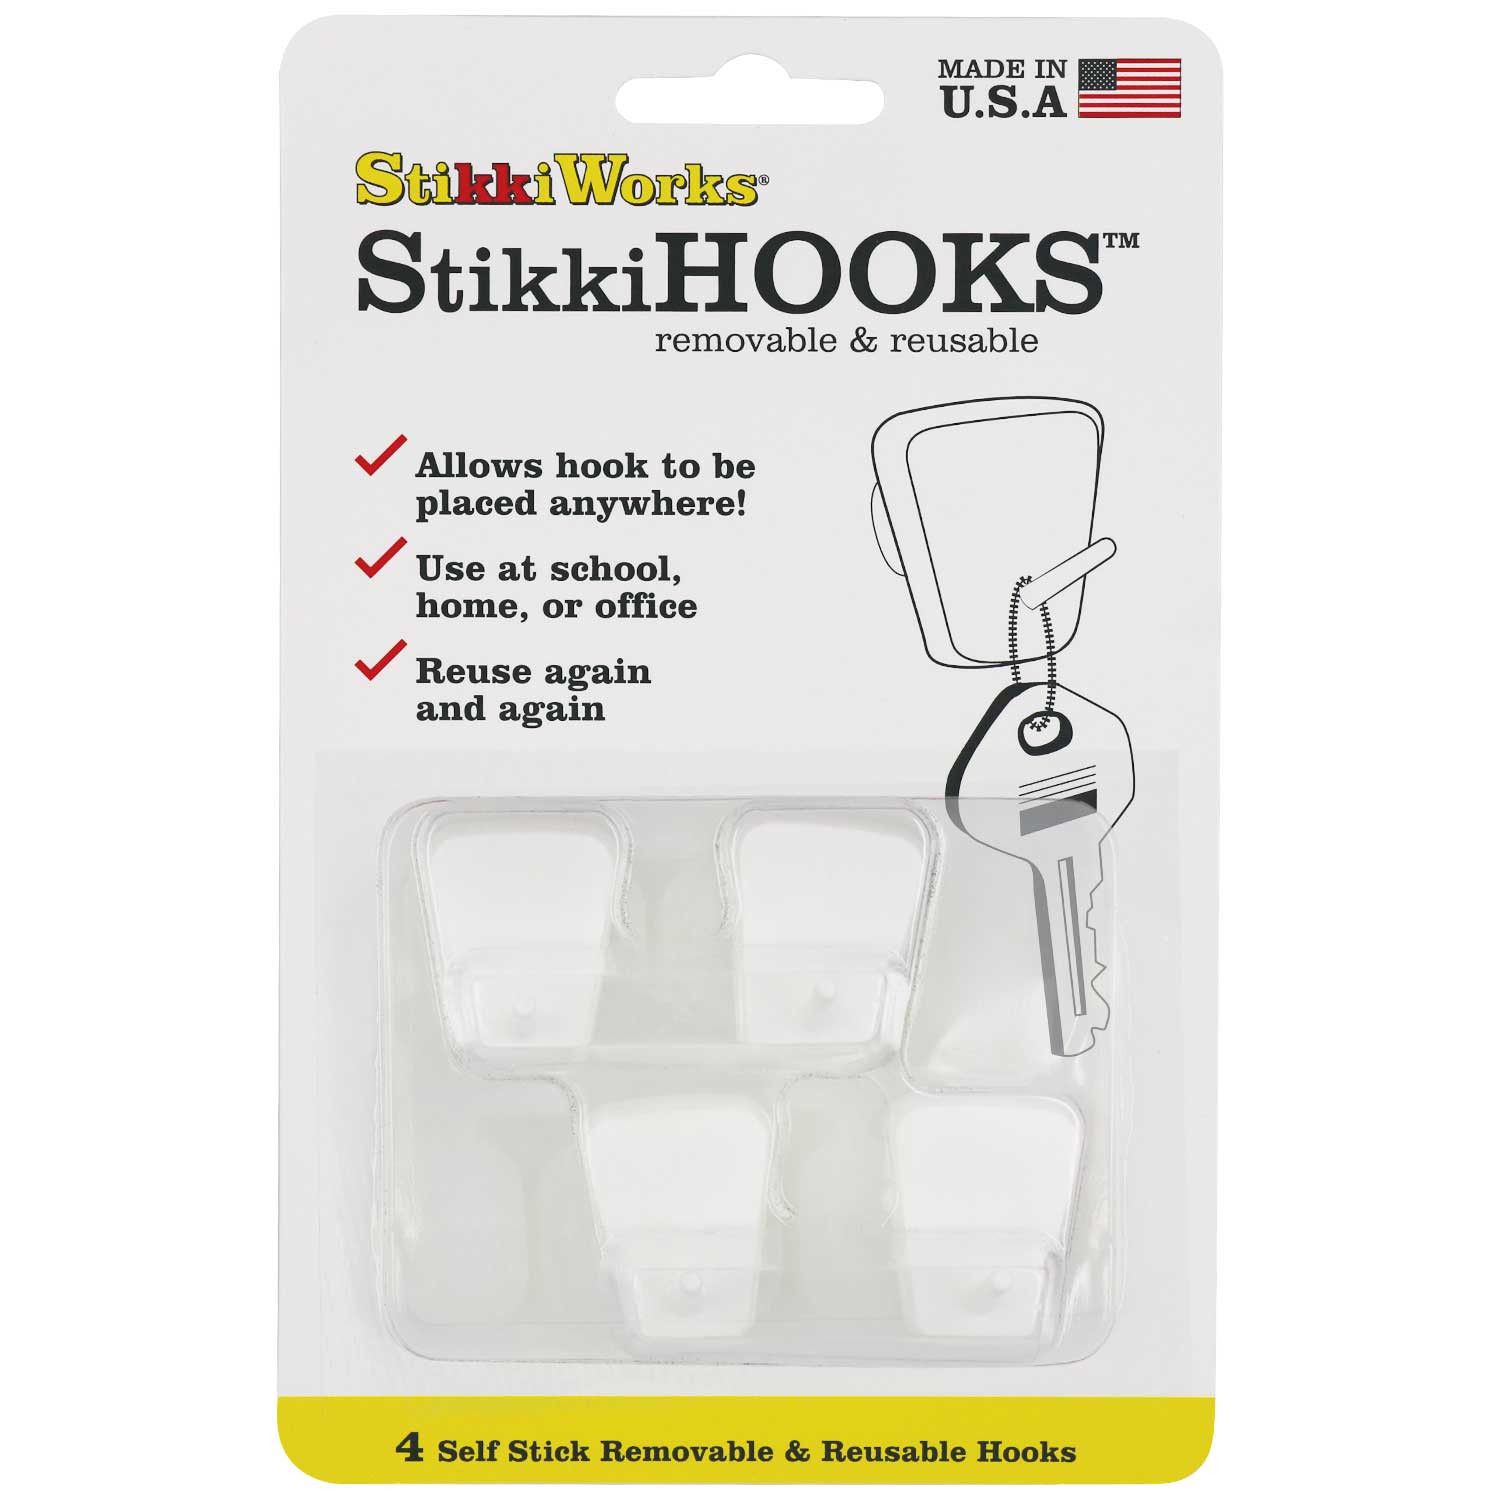 Stikki Wax Reusable Sticks